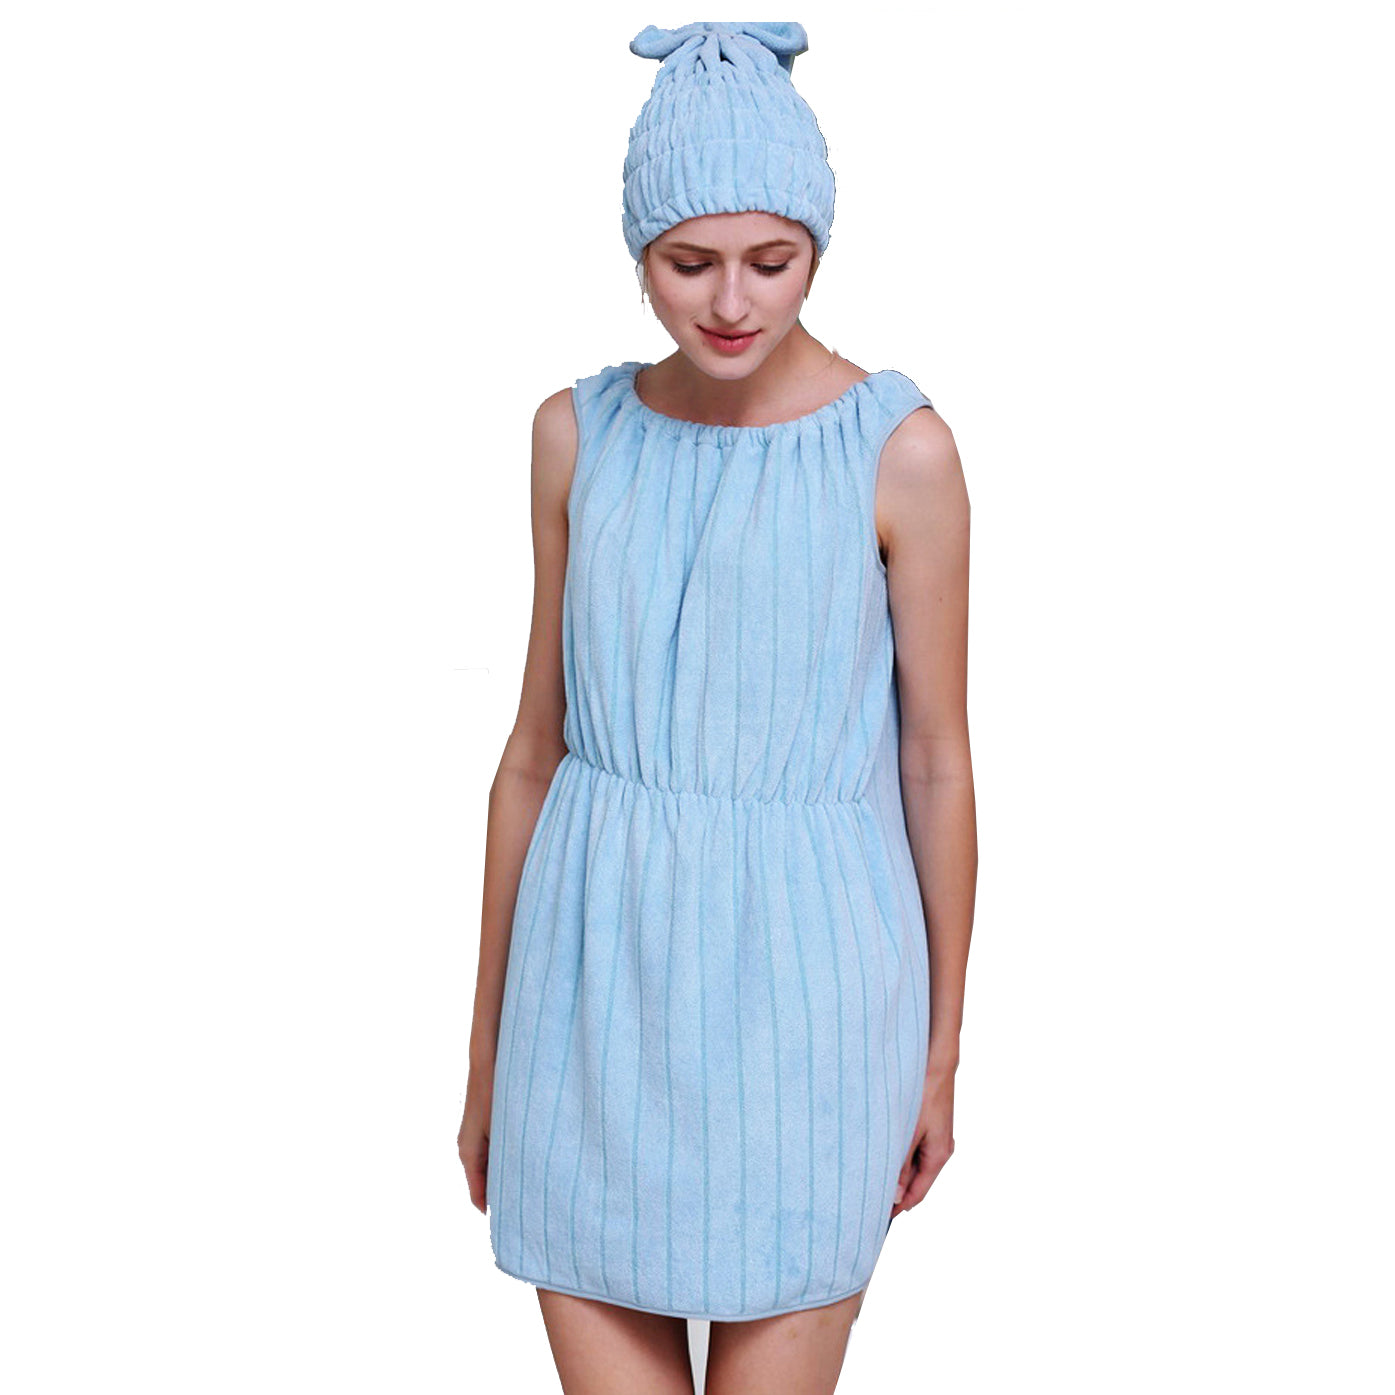 honana bx-r962 soft bathrobe women bath dress microfiber cozy spa bath skirt with bath cap